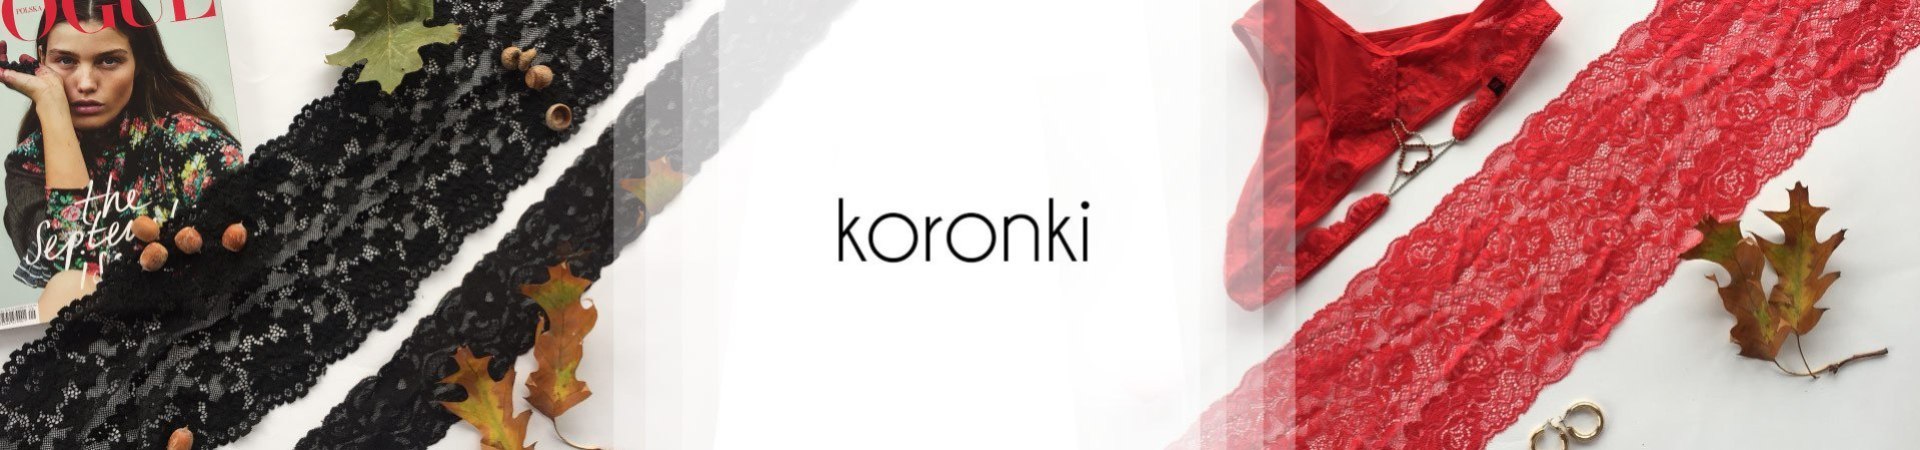 1920x450-koronki-01_cropped(1)